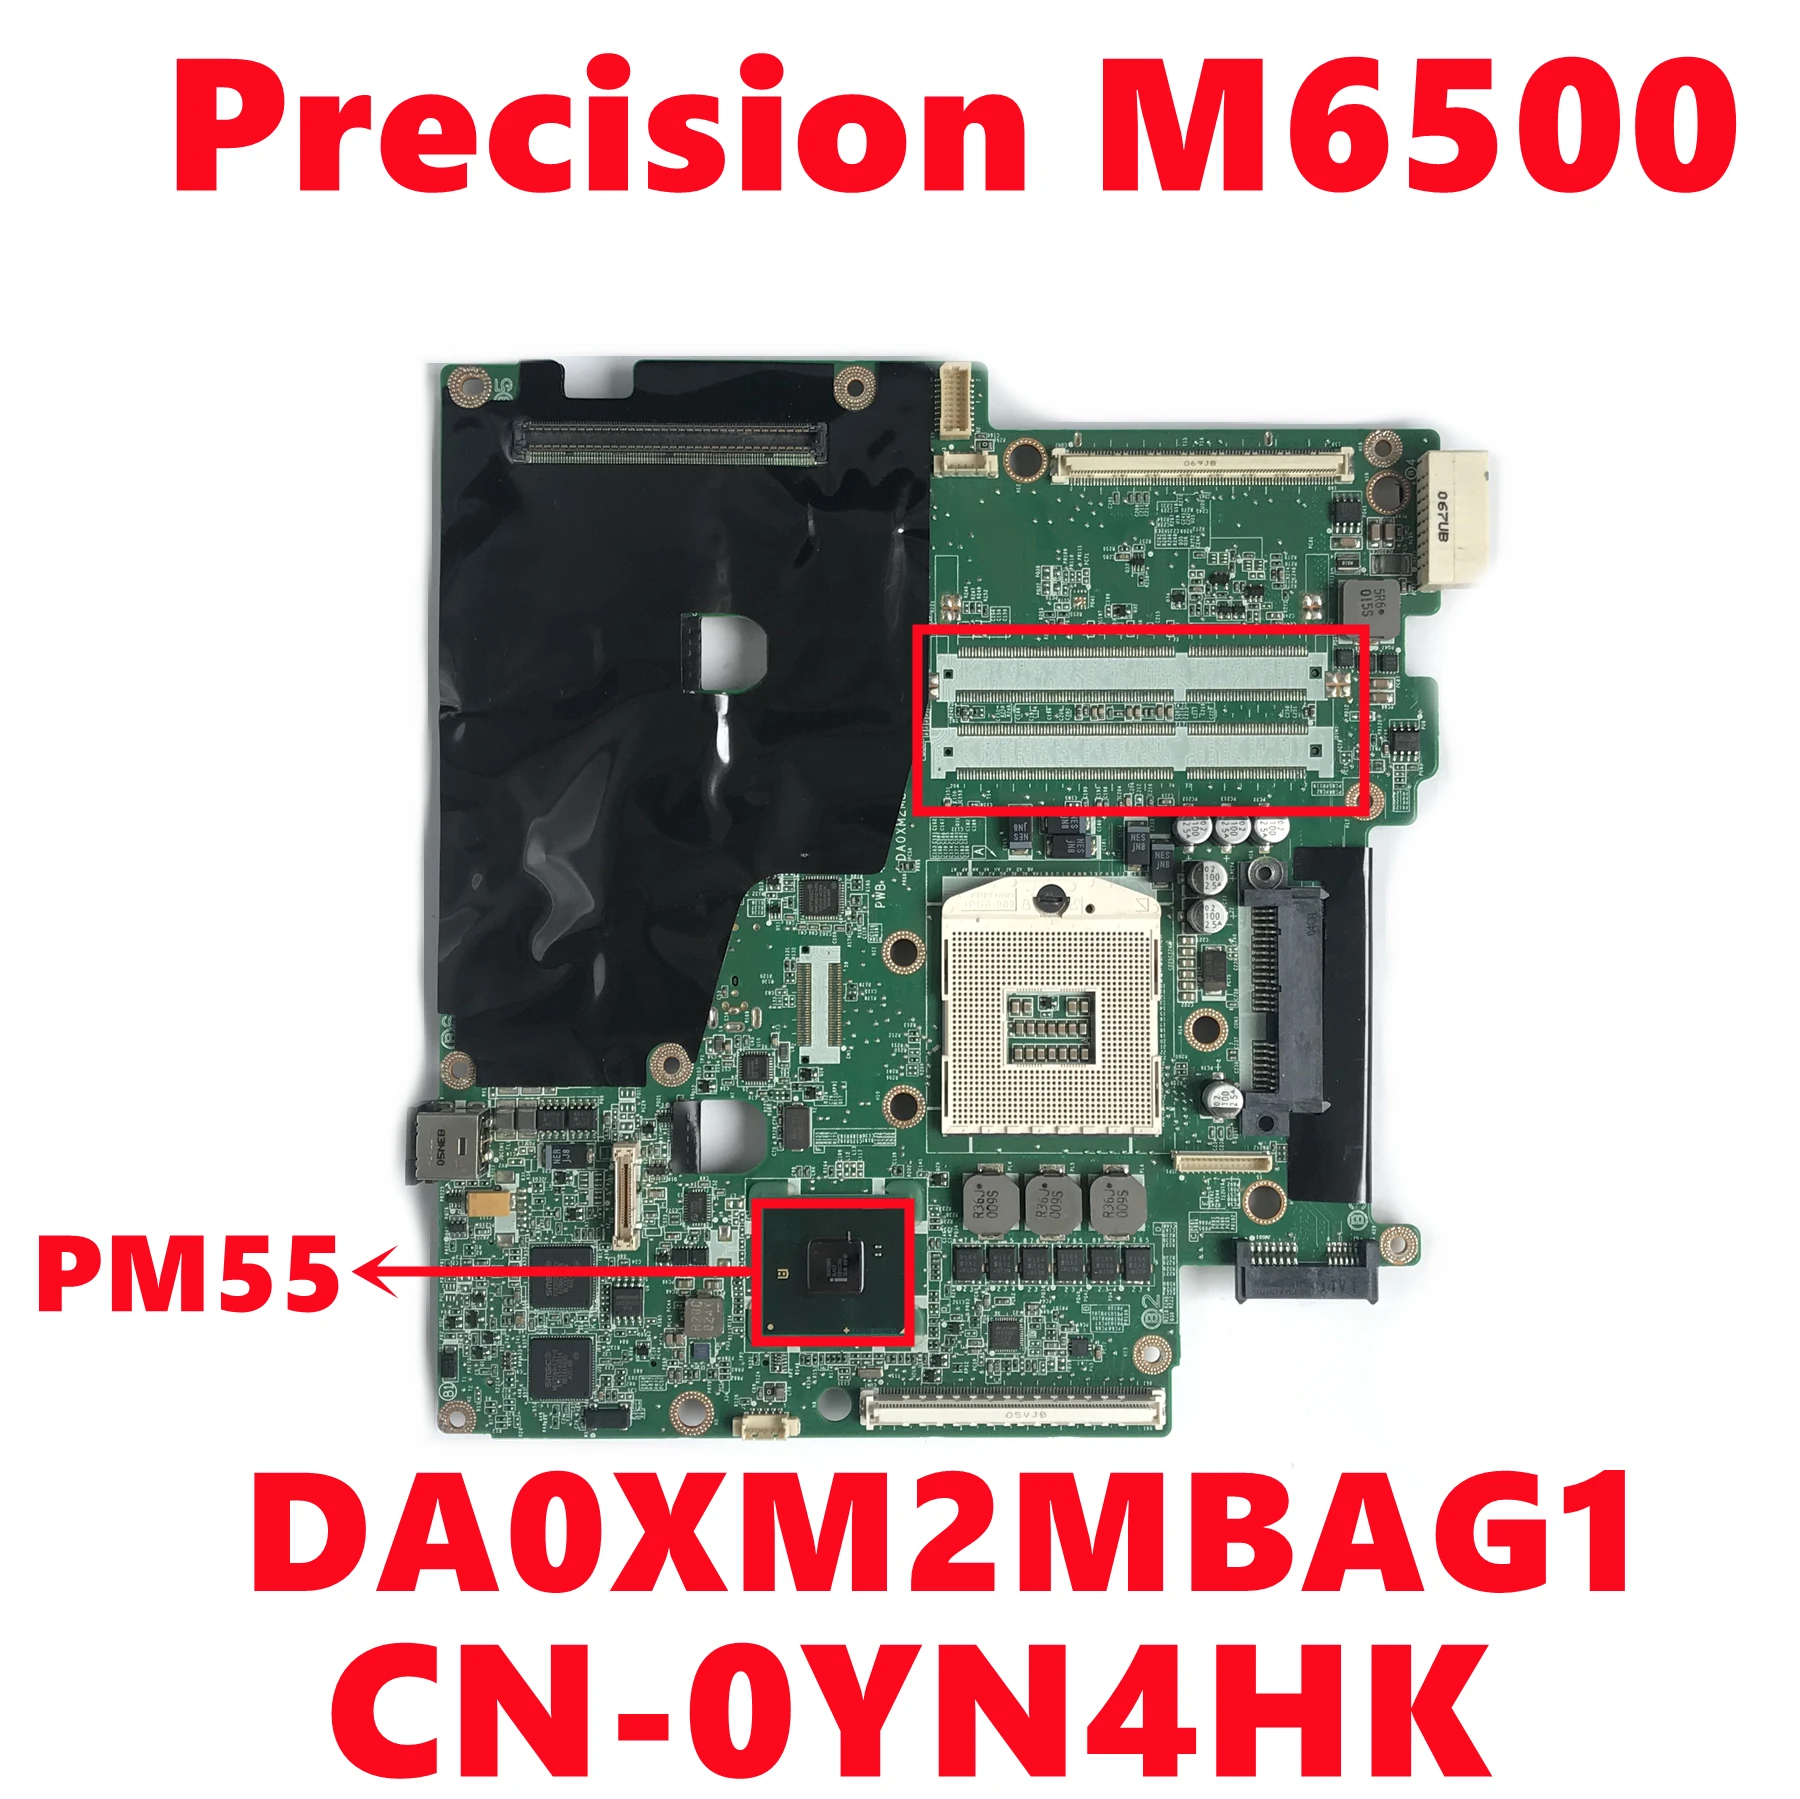 

CN-0YN4HK 0YN4HK YN4HK For Dell Precision M6500 Laptop Motherboard DA0XM2MBAG1 Mainboard PM55 DDR3 Fully Tested Working